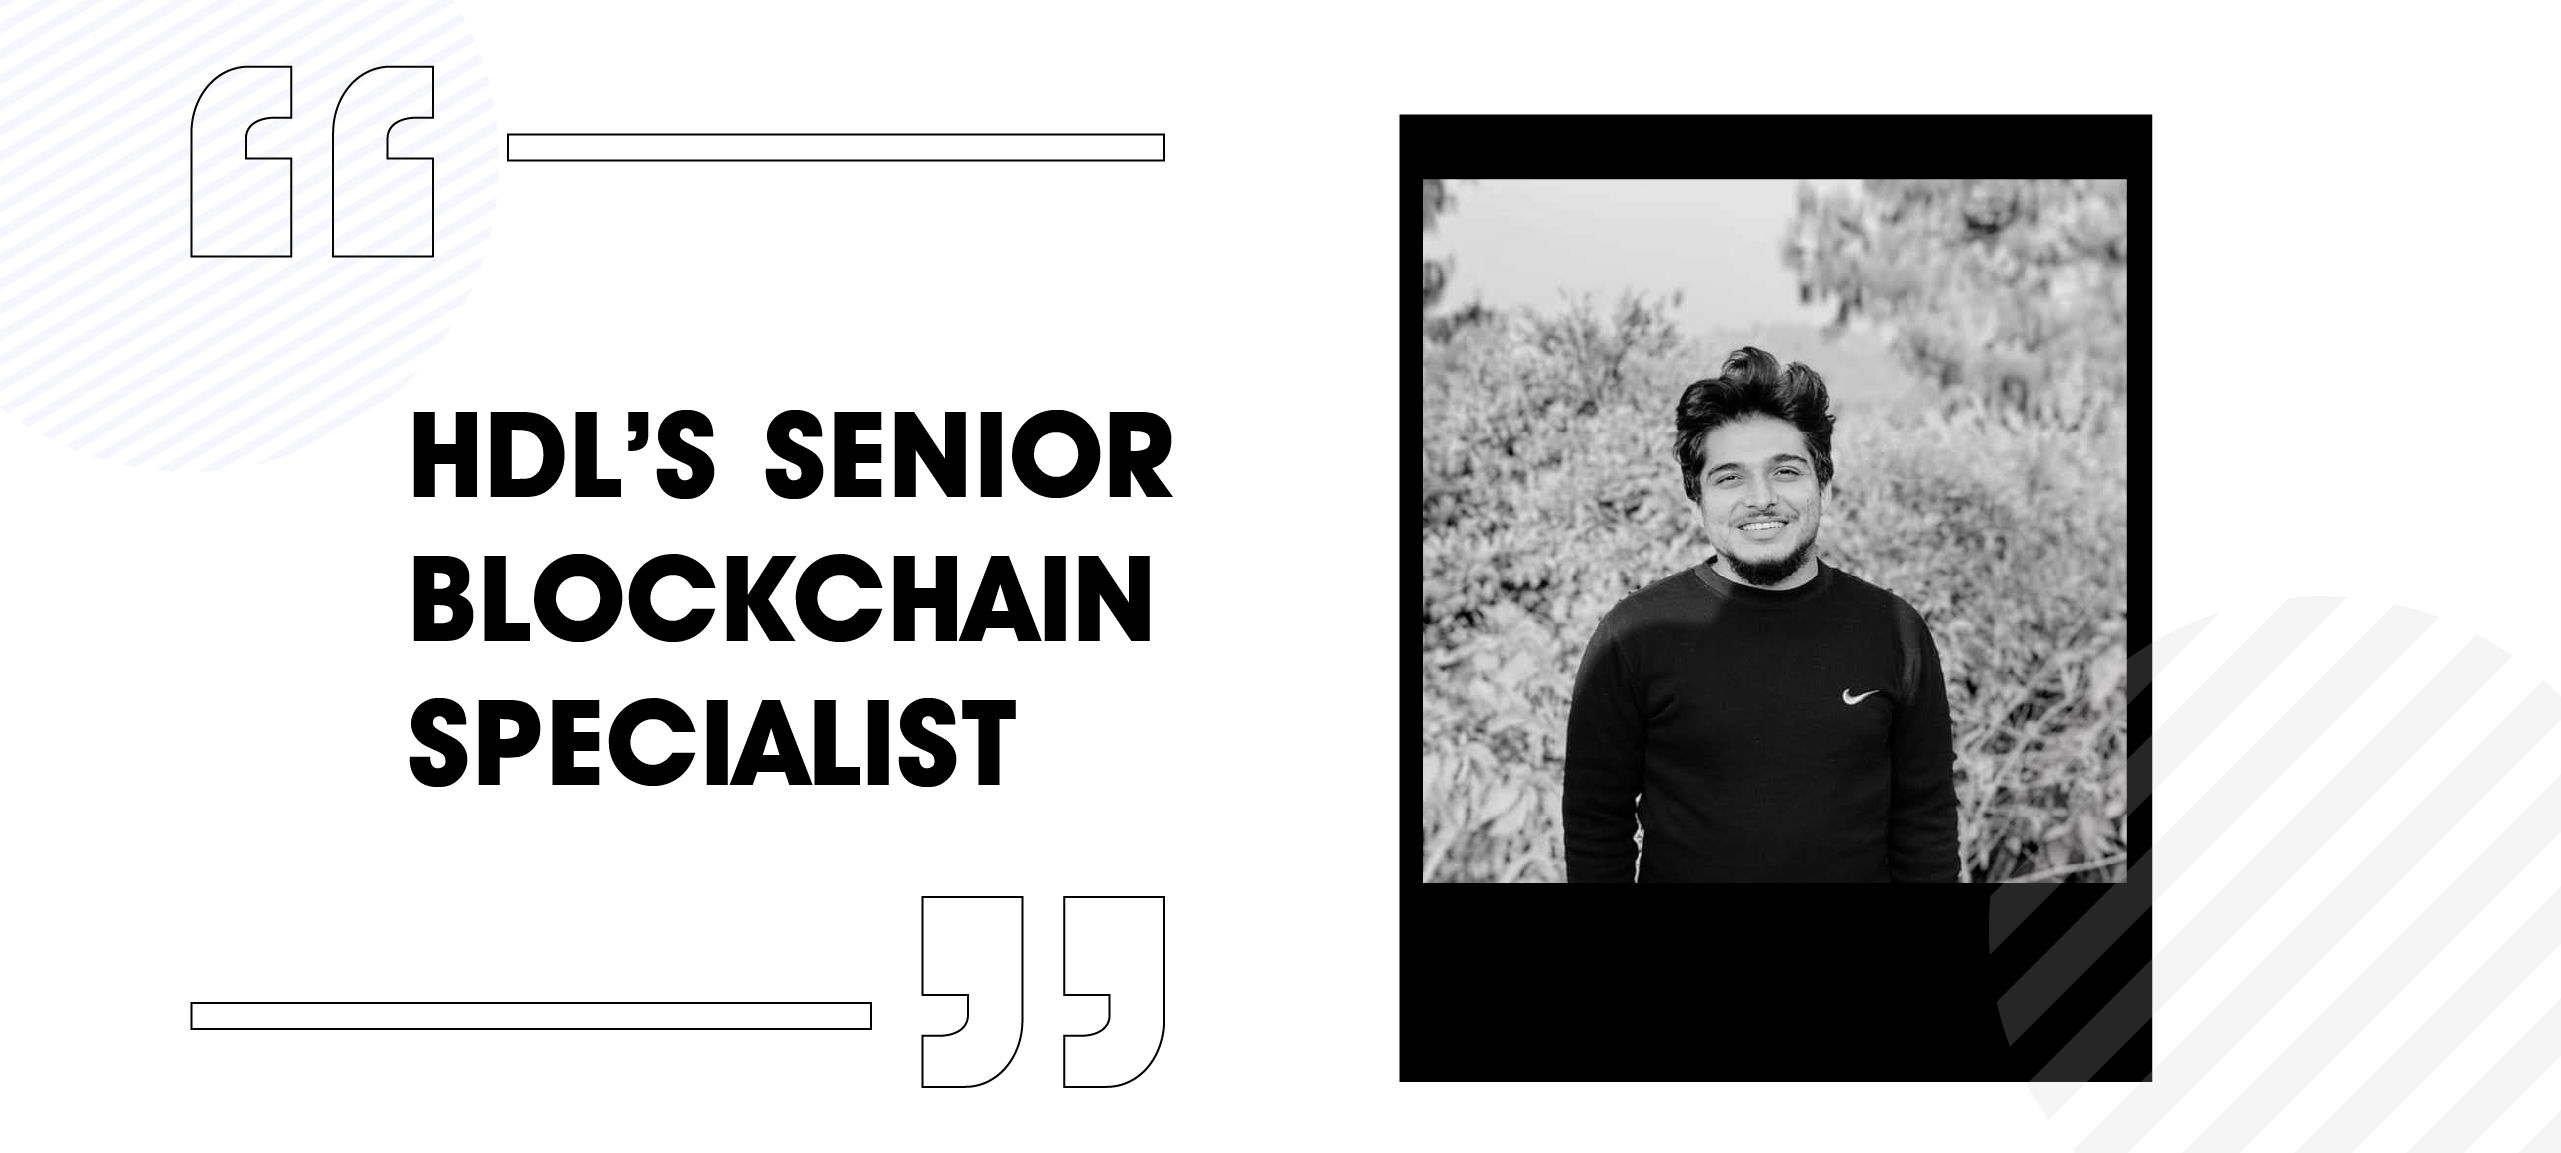 HDL's Senior Blockchain Specialist